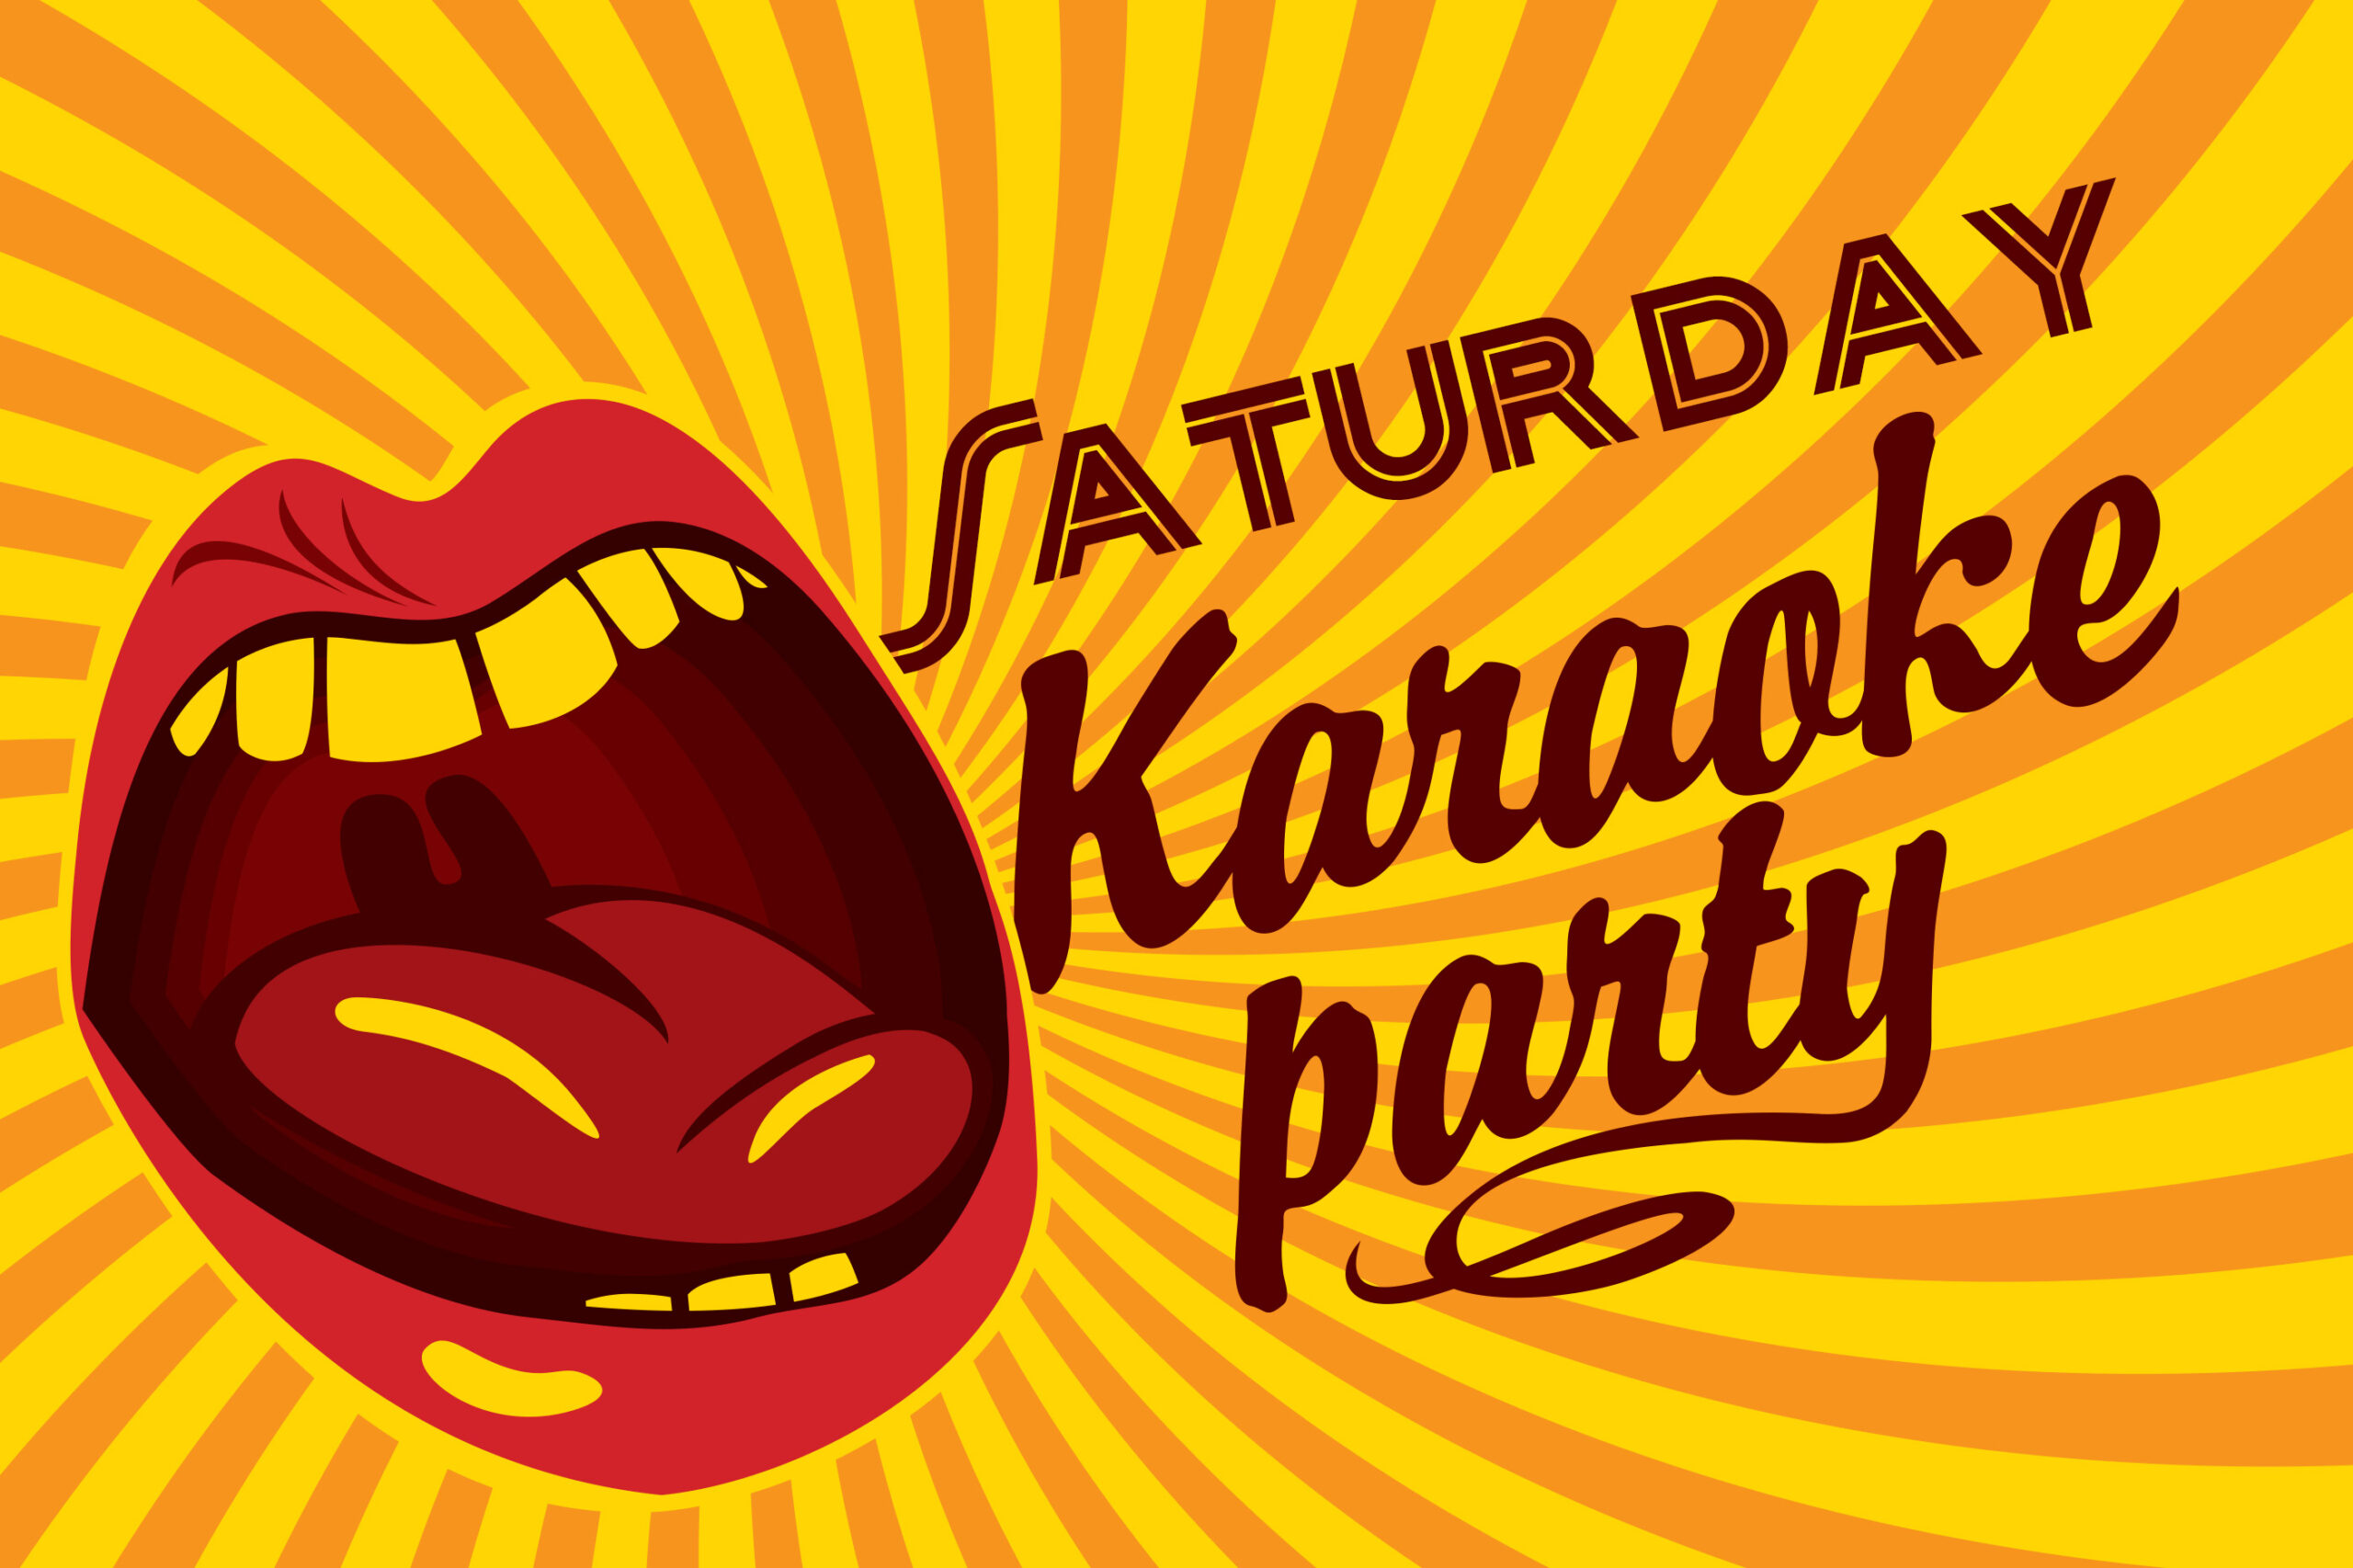 Saturday Karaoke Party at The Logon Cafe and Pub